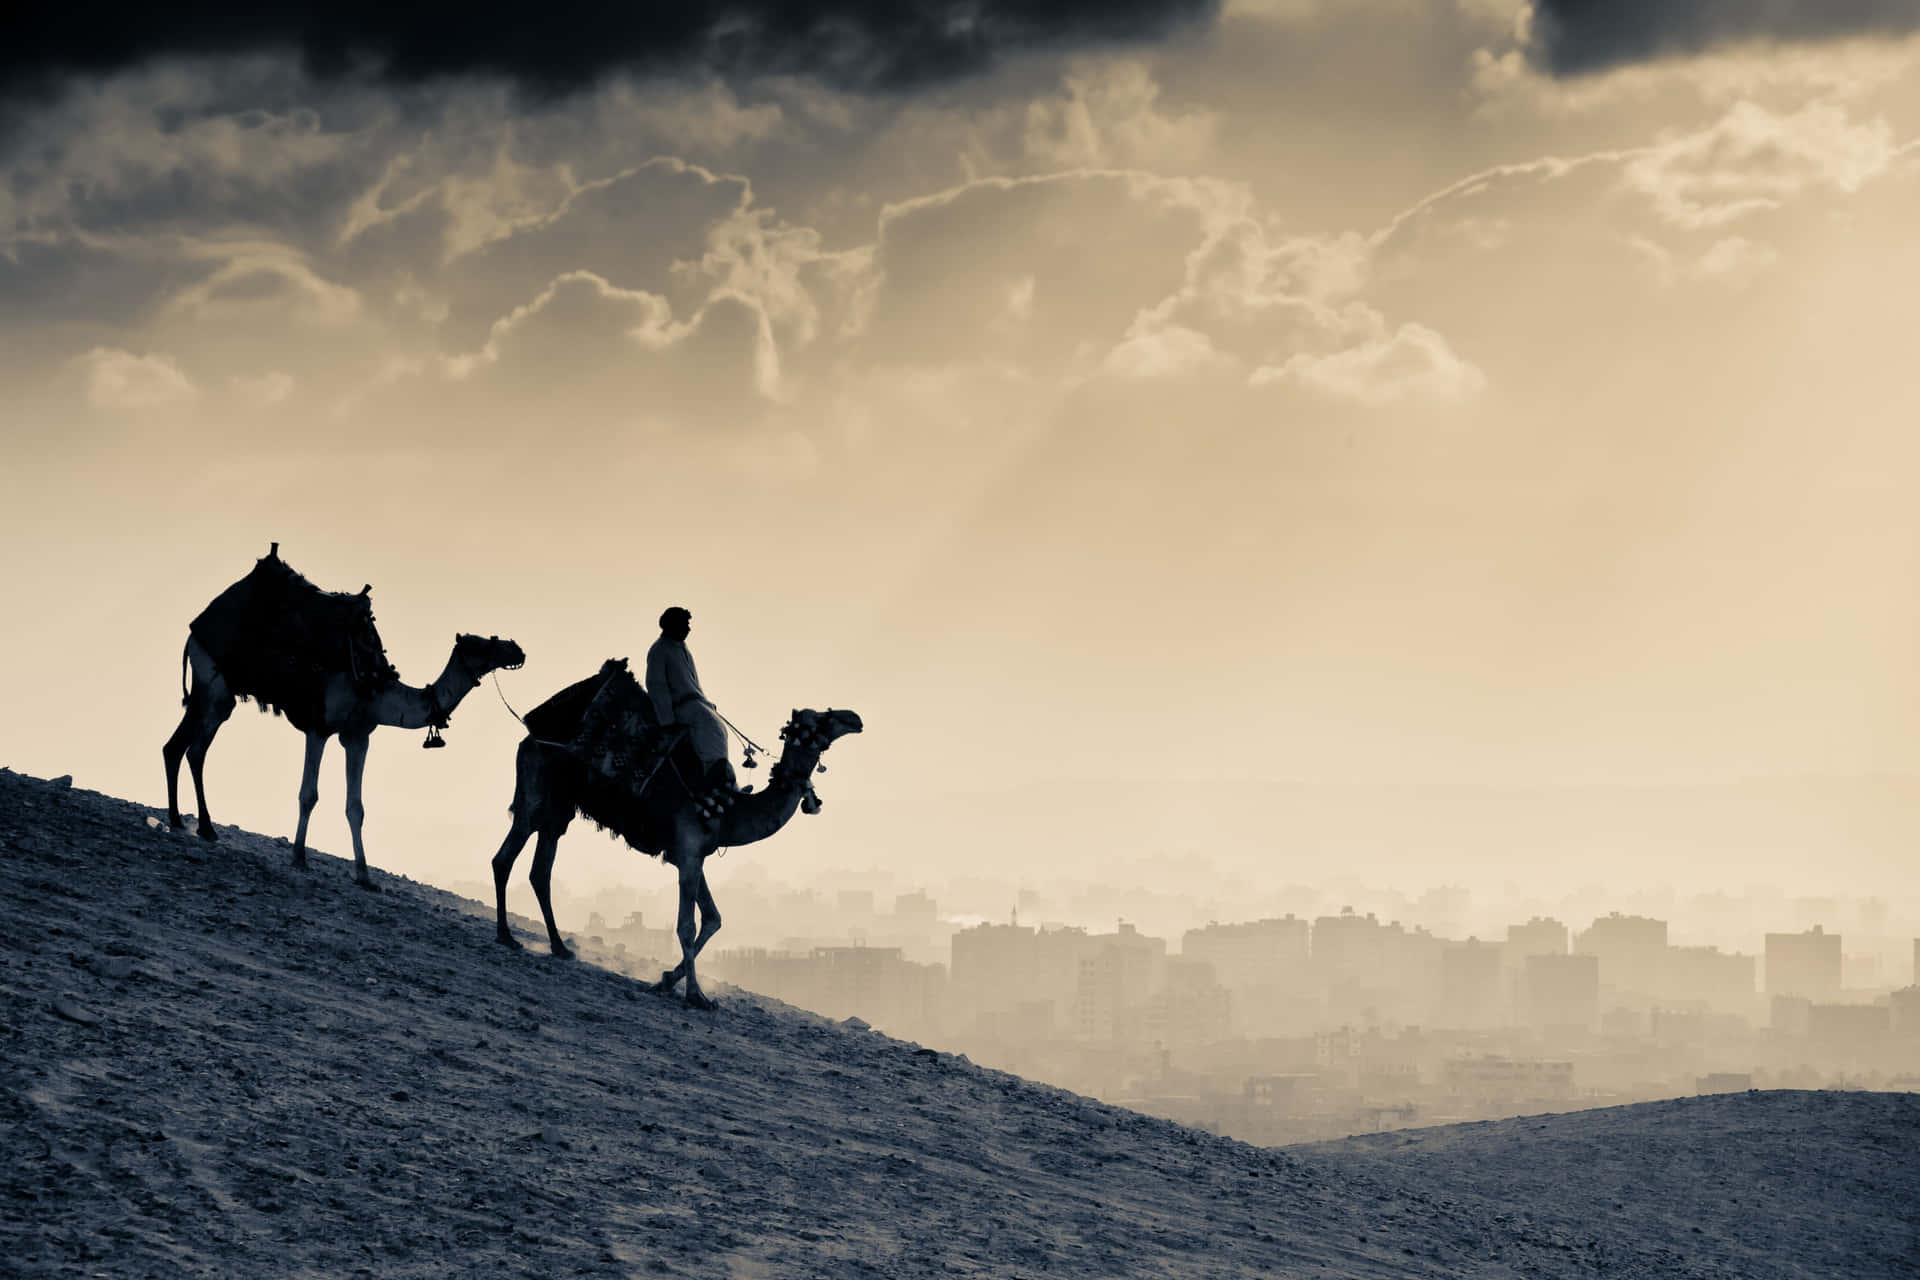 A camel walking on sand in the desert